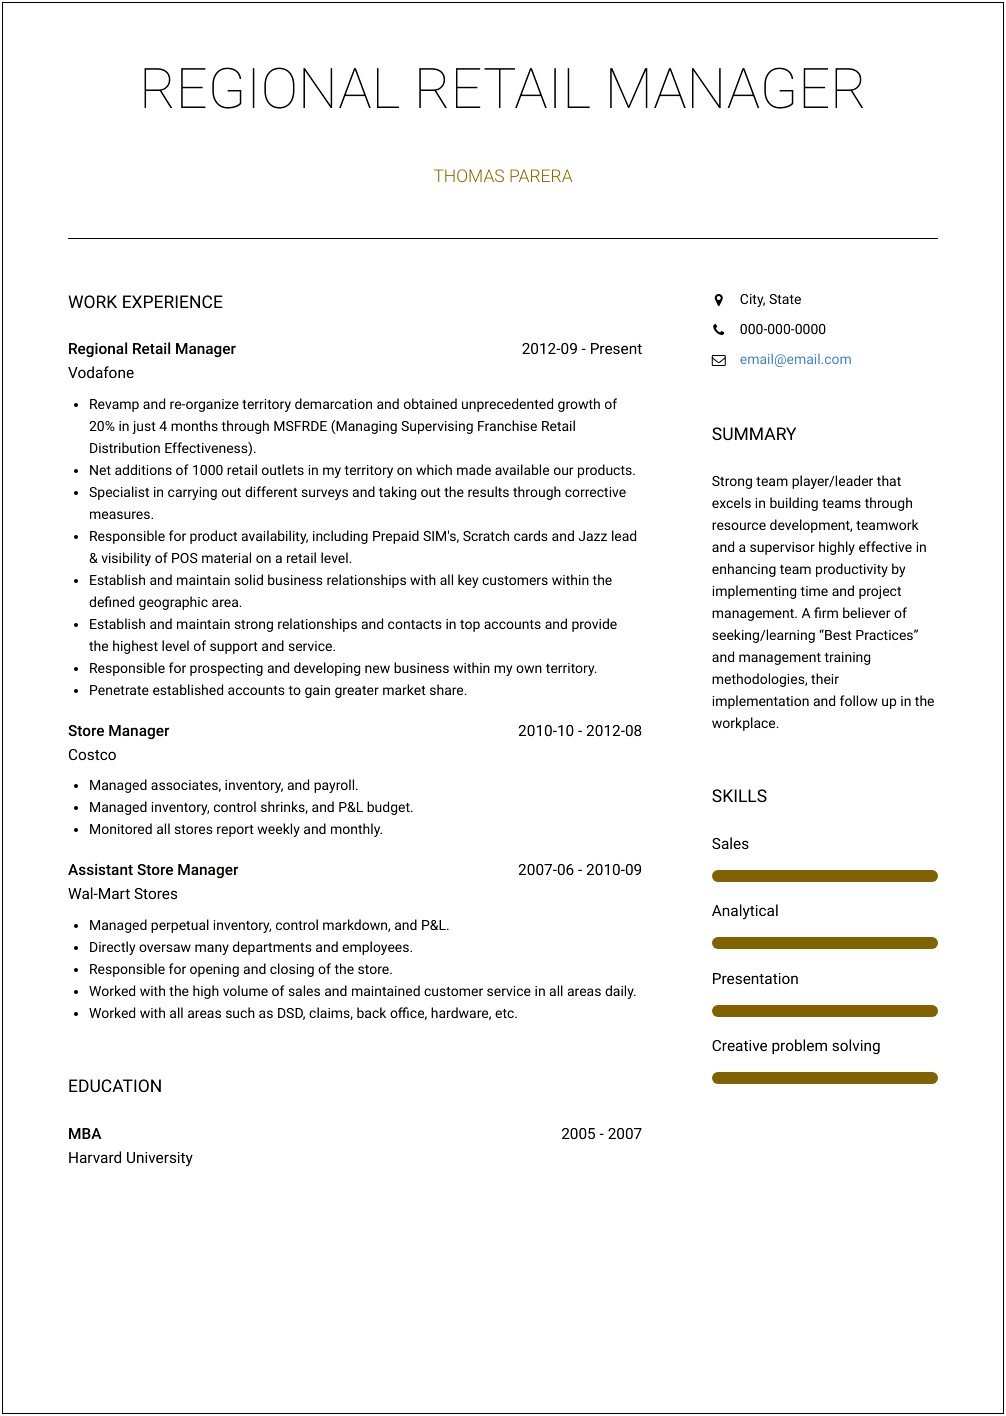 Walmart Assistant Store Manager Job Description Resume